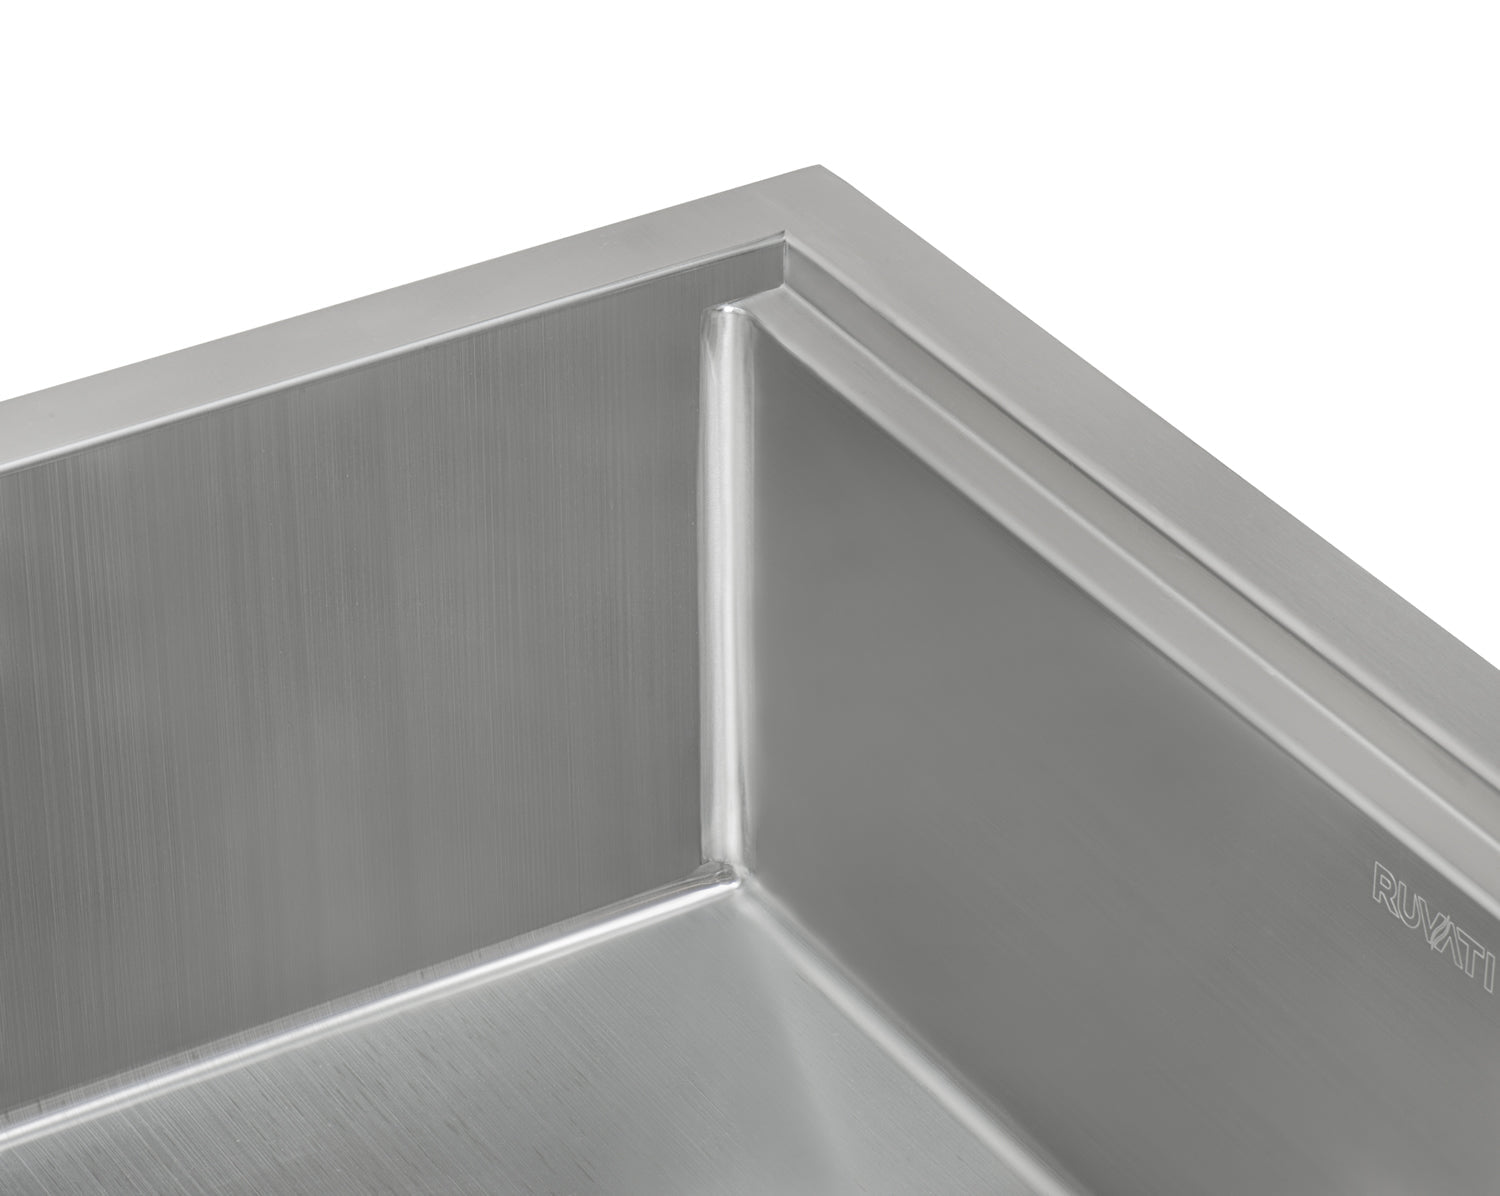 Ruvati Apron-front Workstation Farmhouse Kitchen Sink 16 Gauge Stainless Steel Single Bowl